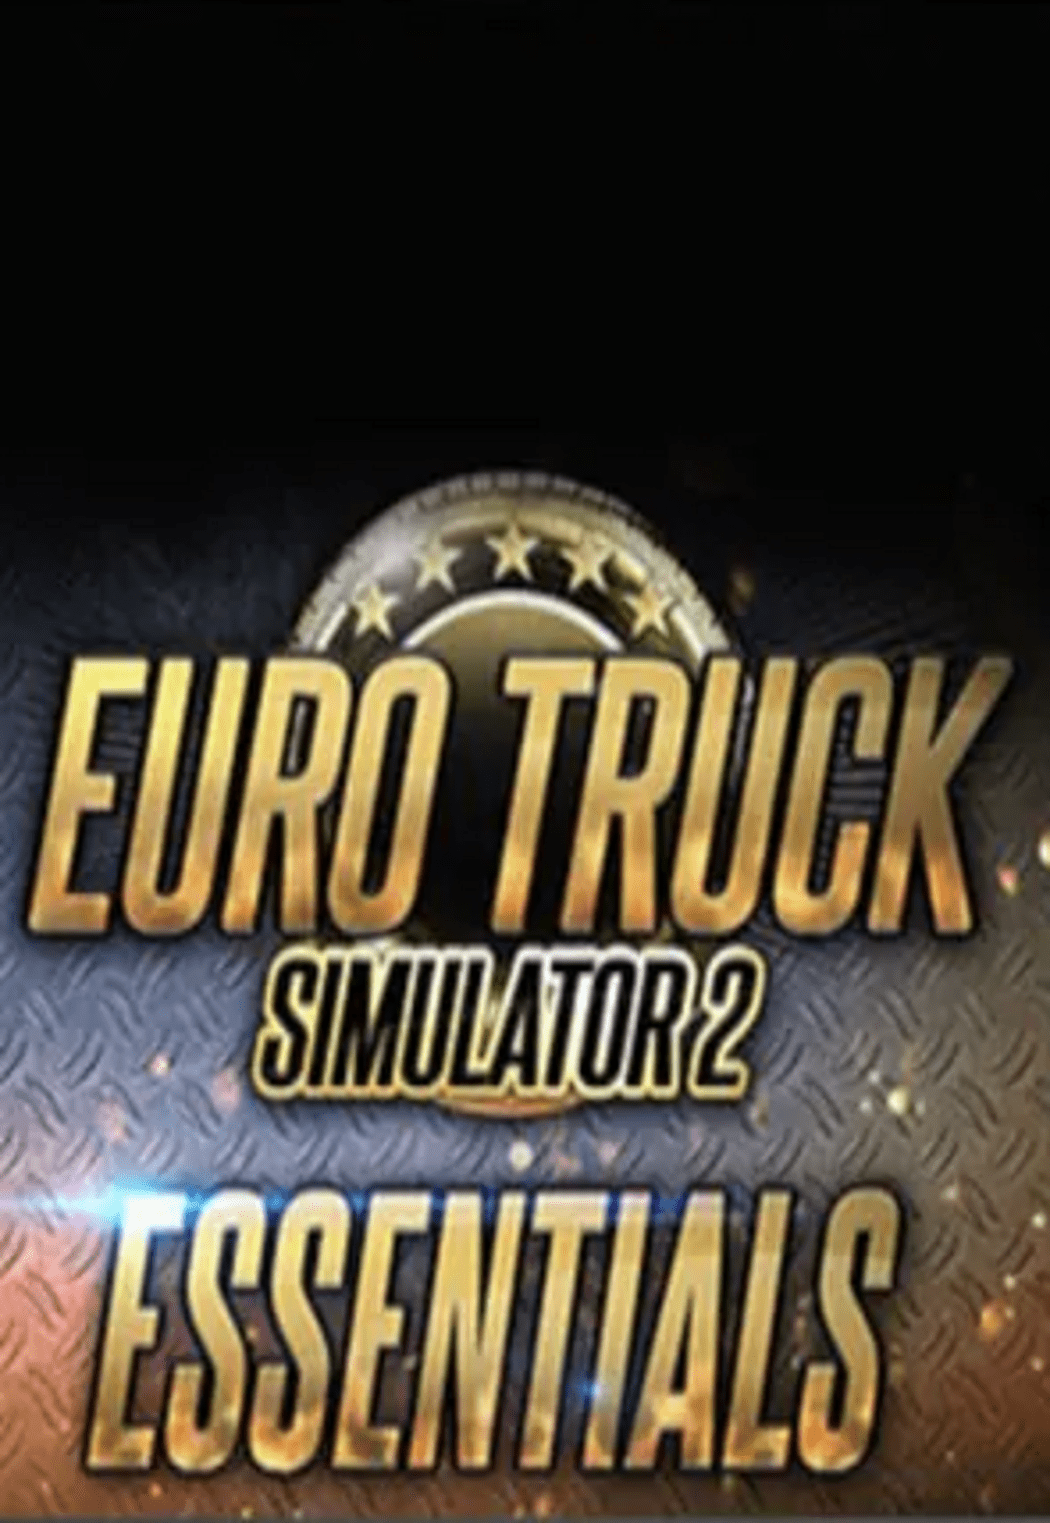 Buy Euro Truck Simulator 2 Essentials Bundle PC Steam key! Cheap